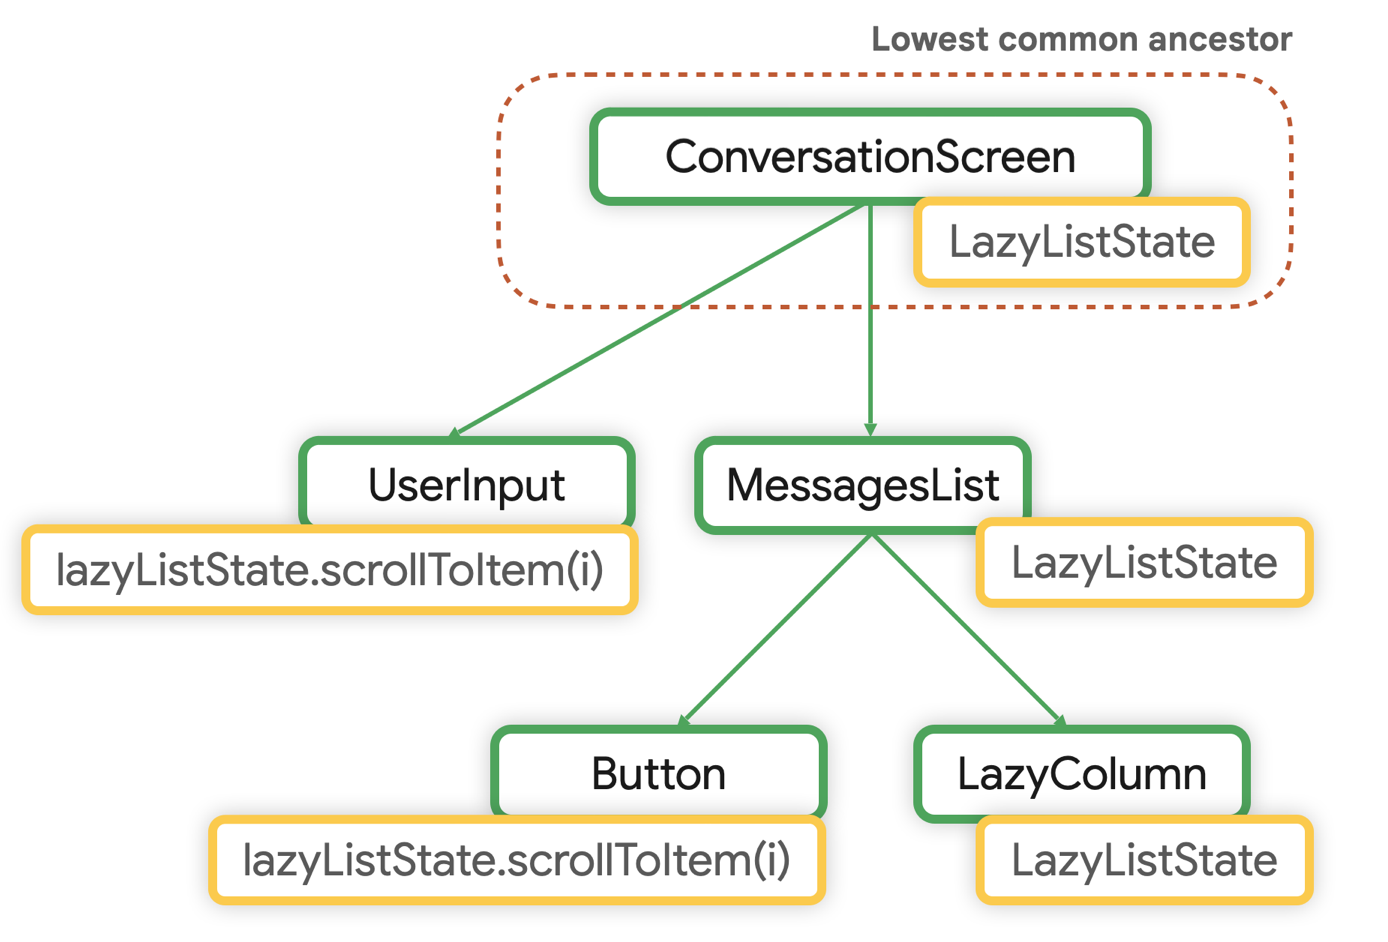 LazyListState 最小的共同祖系是 ConversationScreen